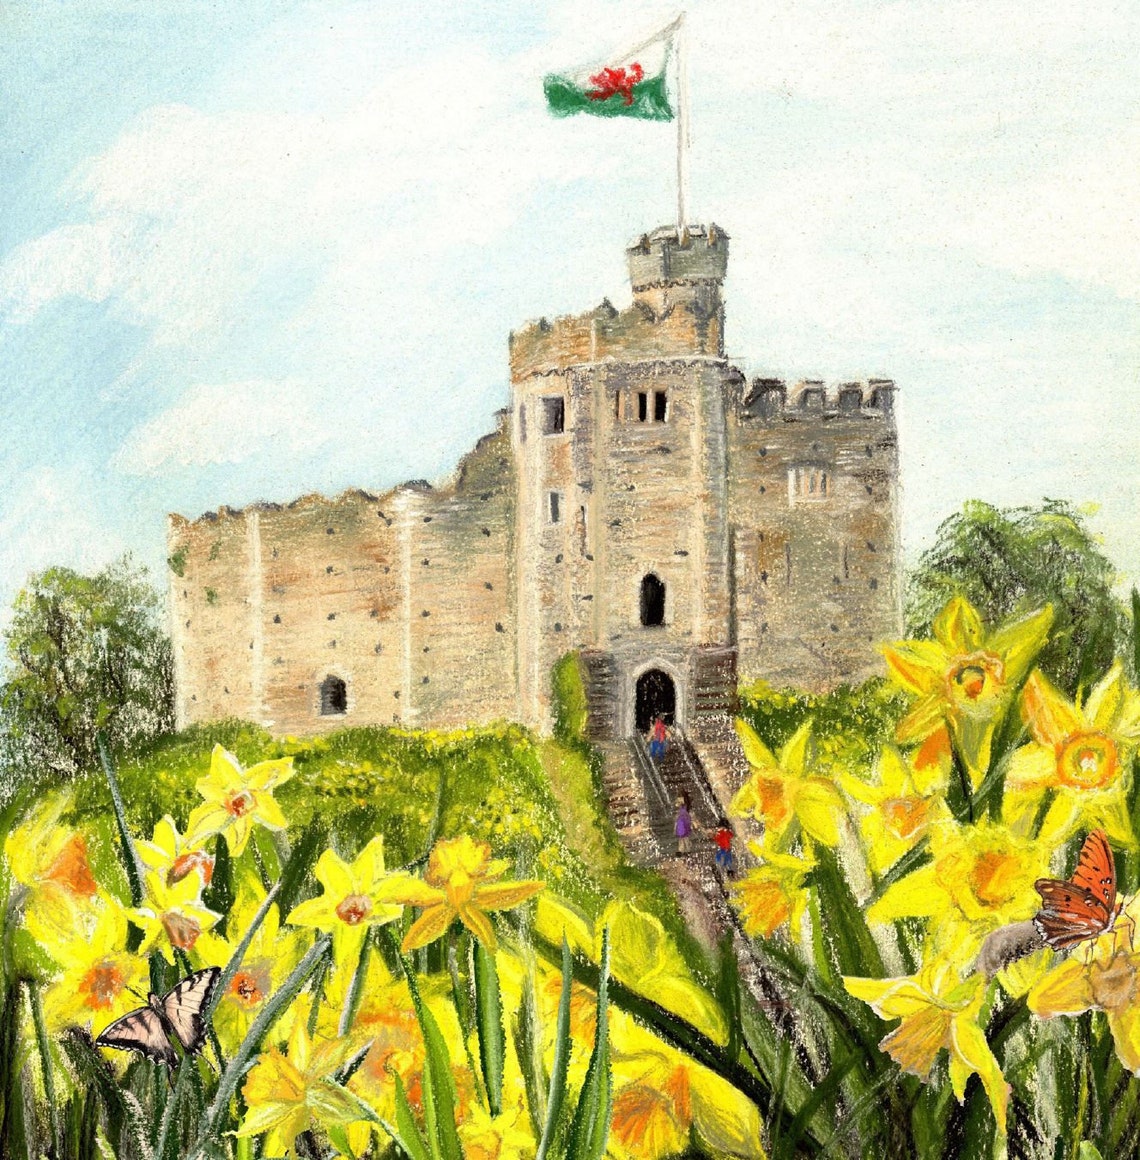 Greeting Card - Cardiff Castle Keep